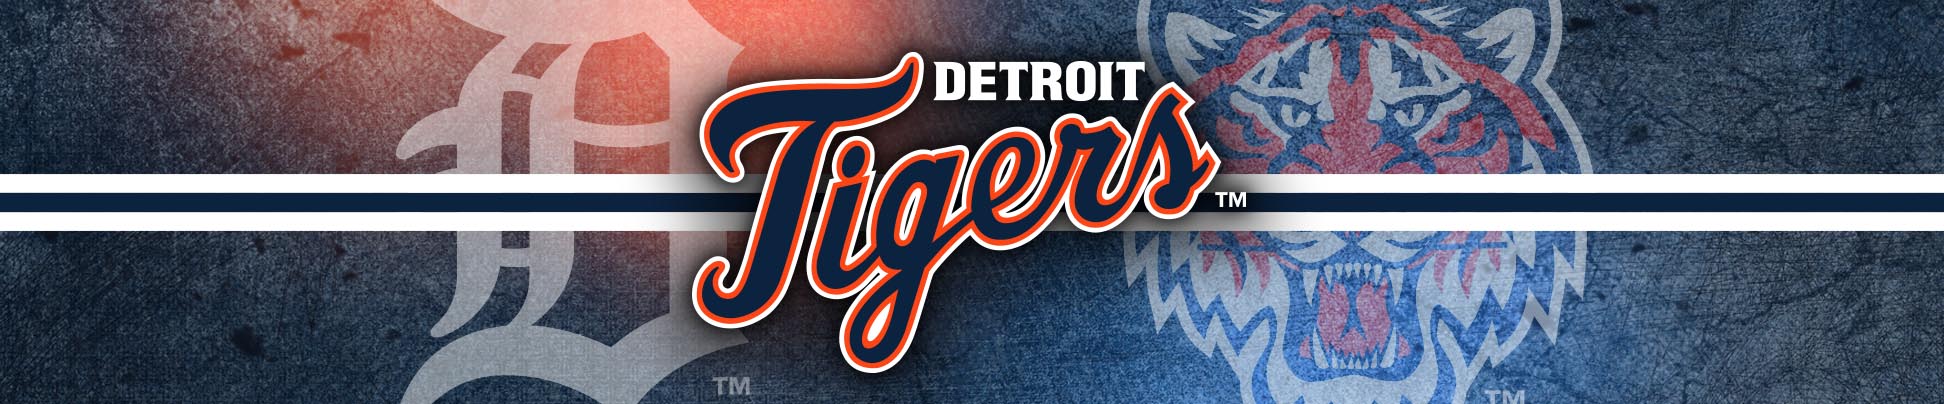 Detroit Tigers Memorabilia & Collectibles